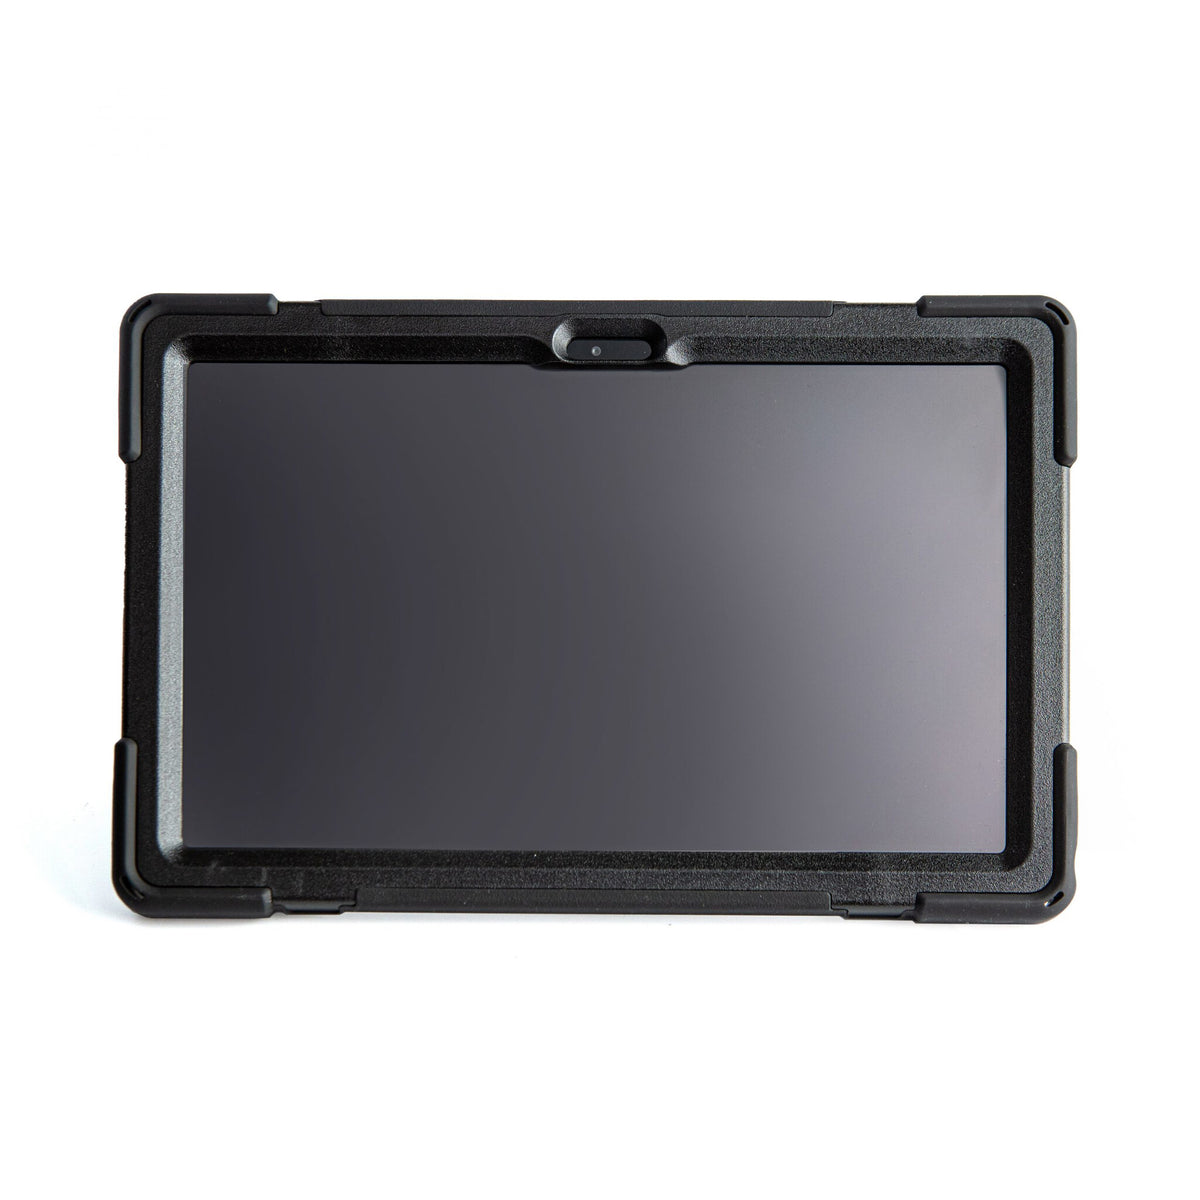 Techair Rugged Case for Galaxy Tab A7 in Black